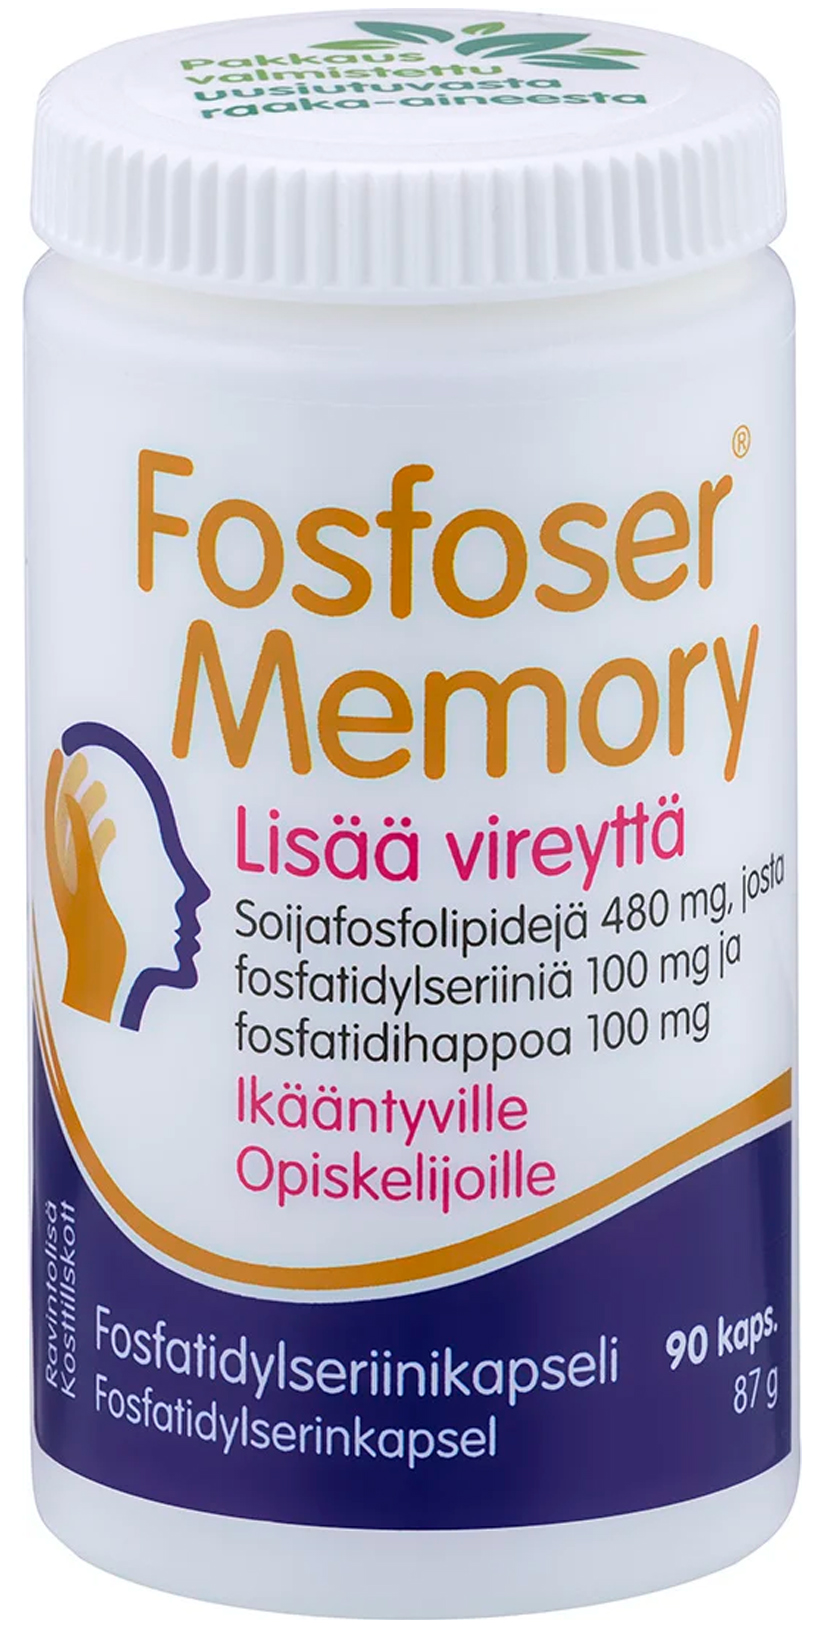 Fosfoser Memory 90 kaps 87g | Laplandia Market